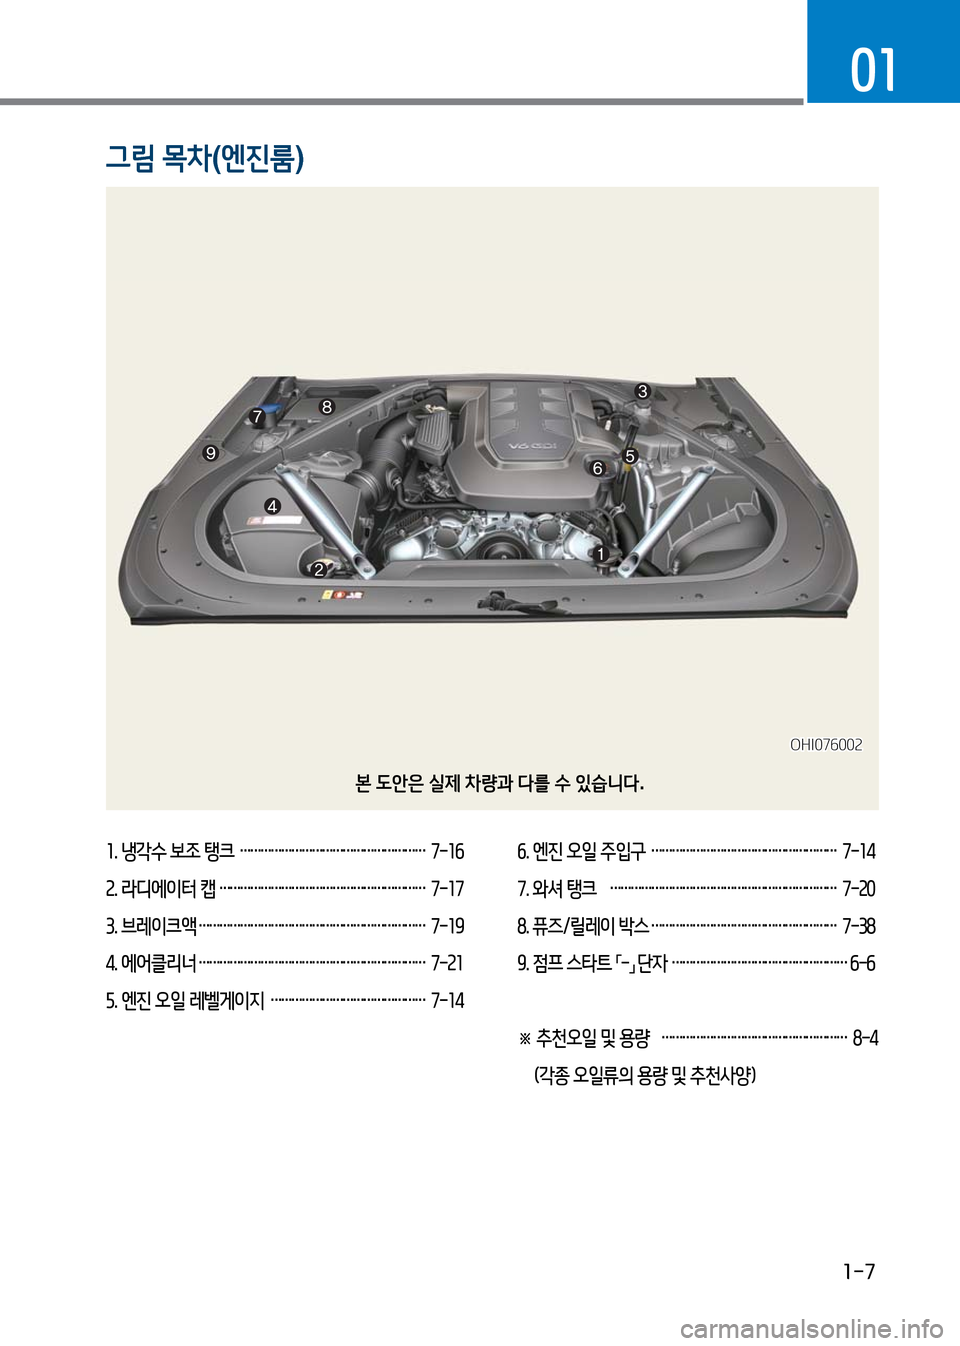 Hyundai Genesis 2016  EQ900 HI - 사용 설명서 (in Korean) 1-7
01
1. 냉각수 보조 탱크  ……………………………………………… 7-16
2. 라디에이터 캡 ……………………………………………………  7-17
3. 브레이크